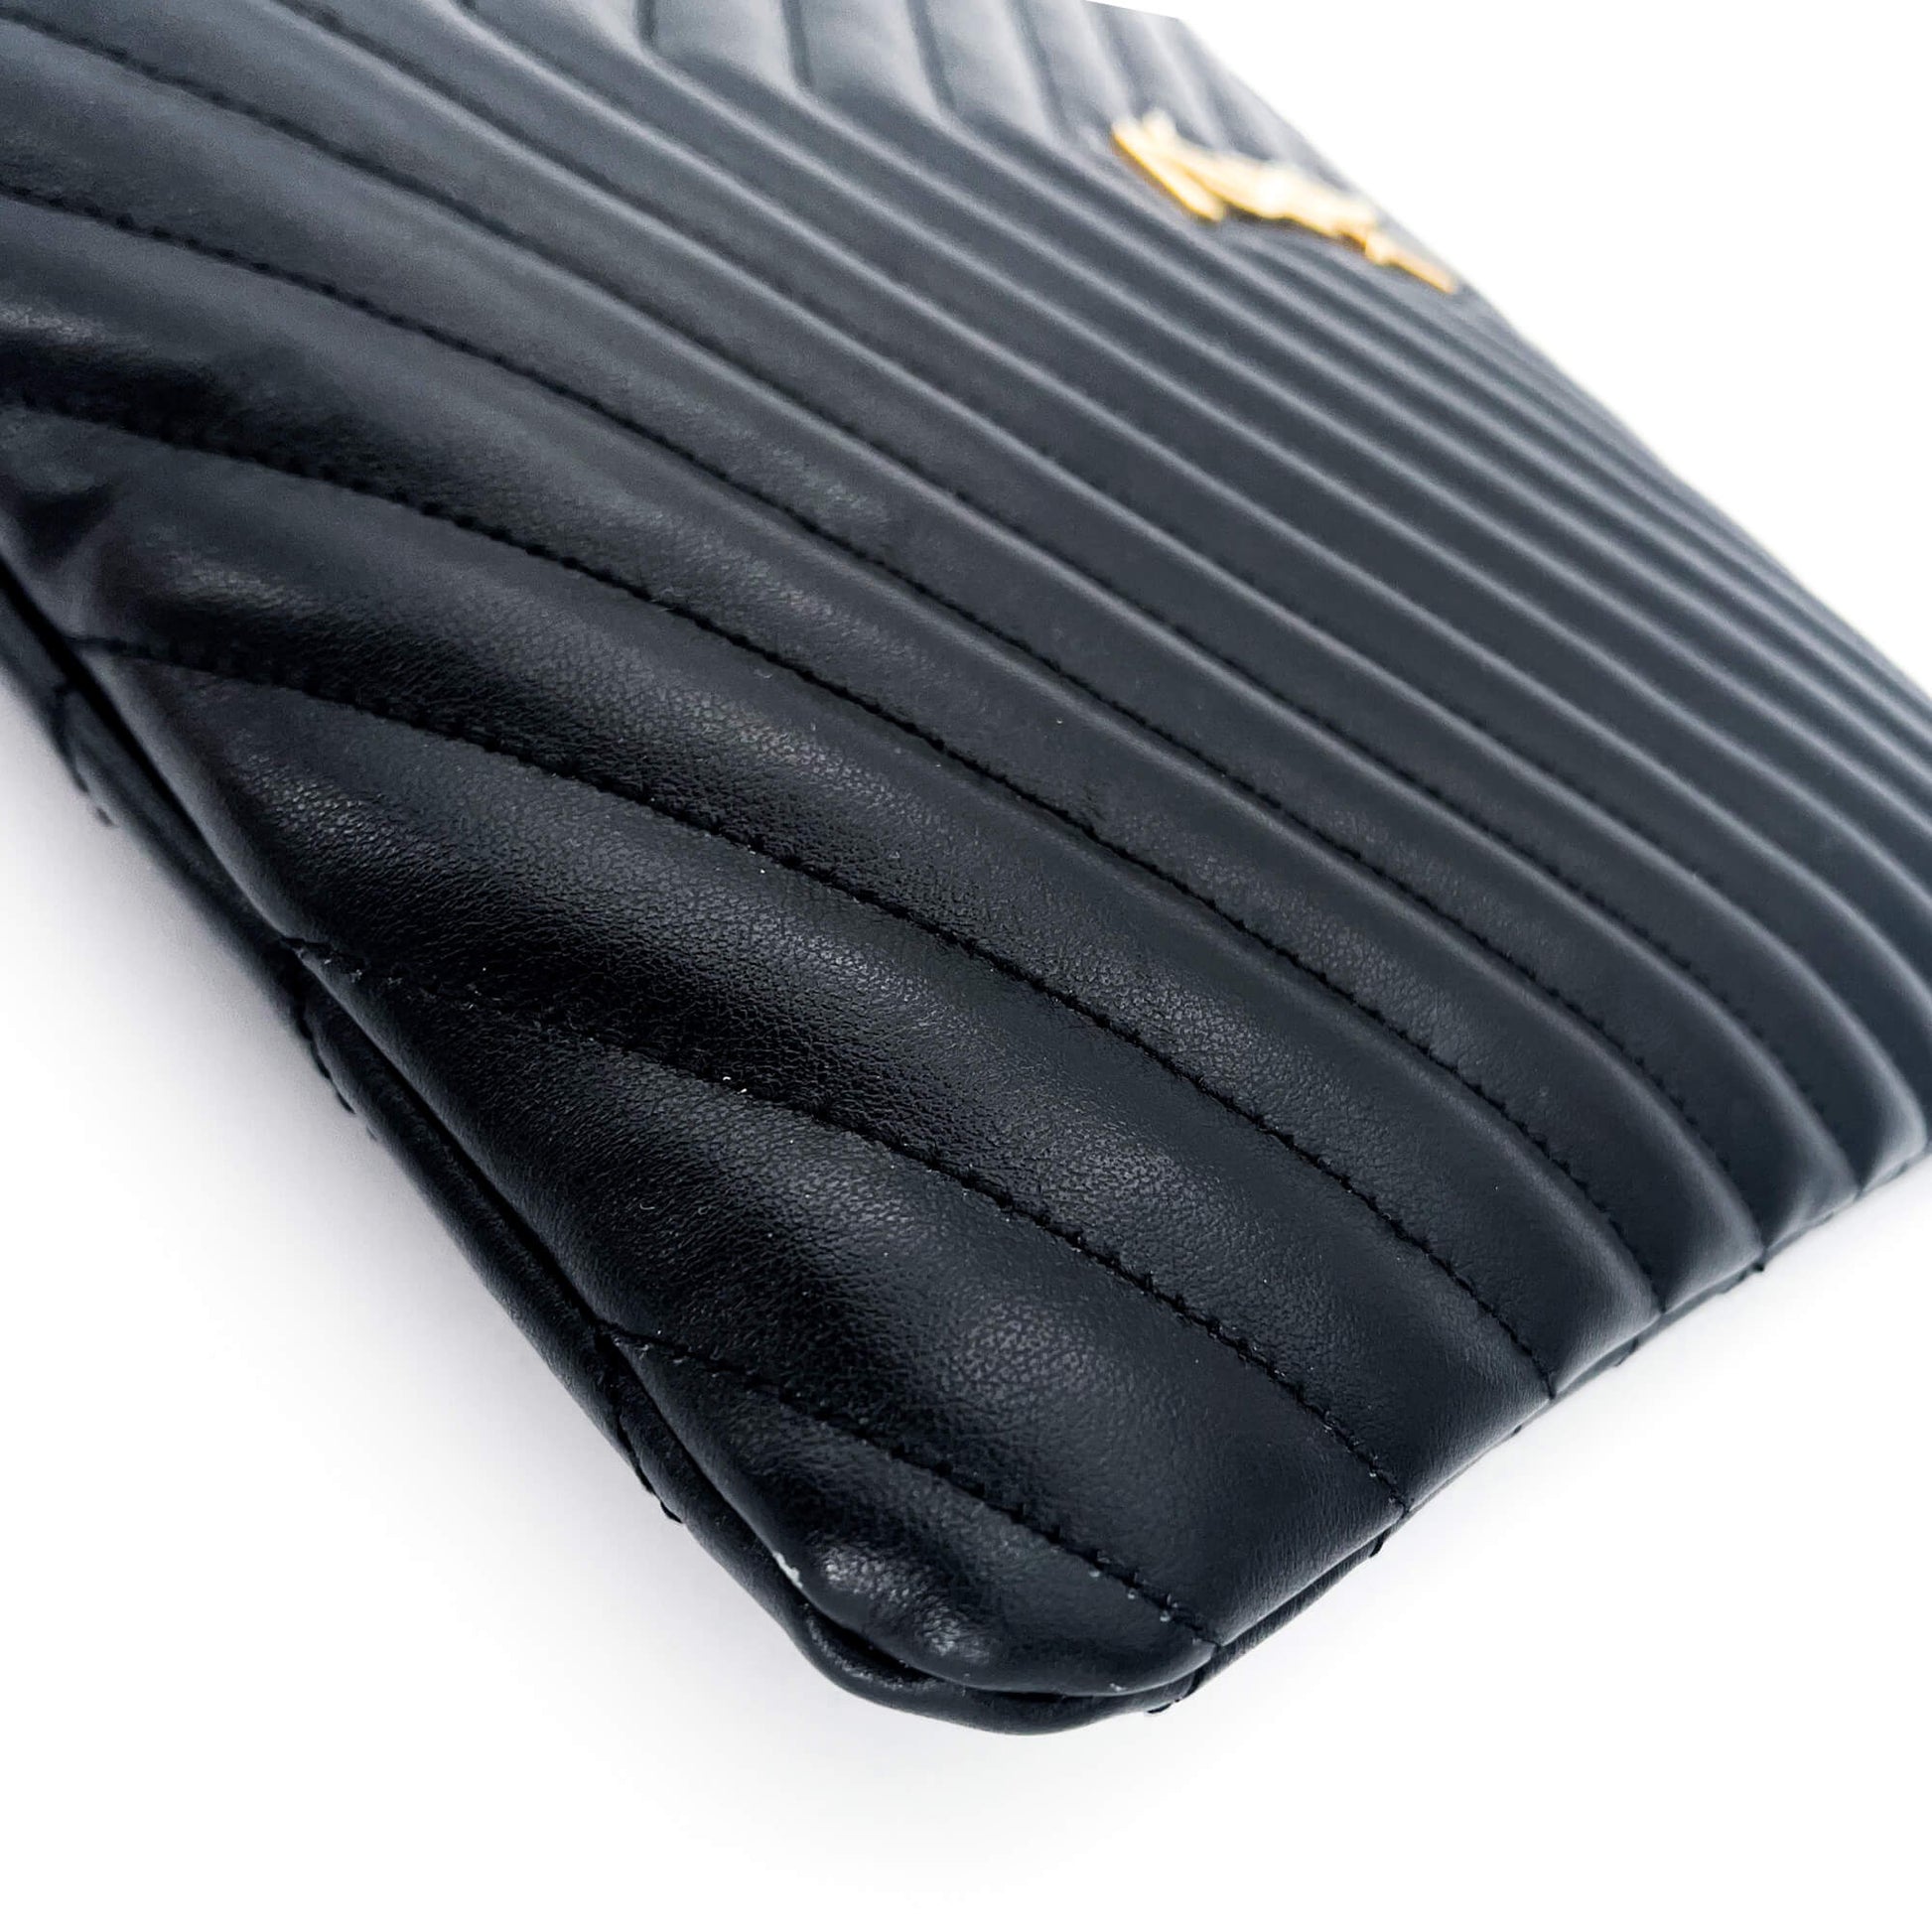 Yves Saint Laurent-New Jolie Black Leather Clutch-at Tabita Bags